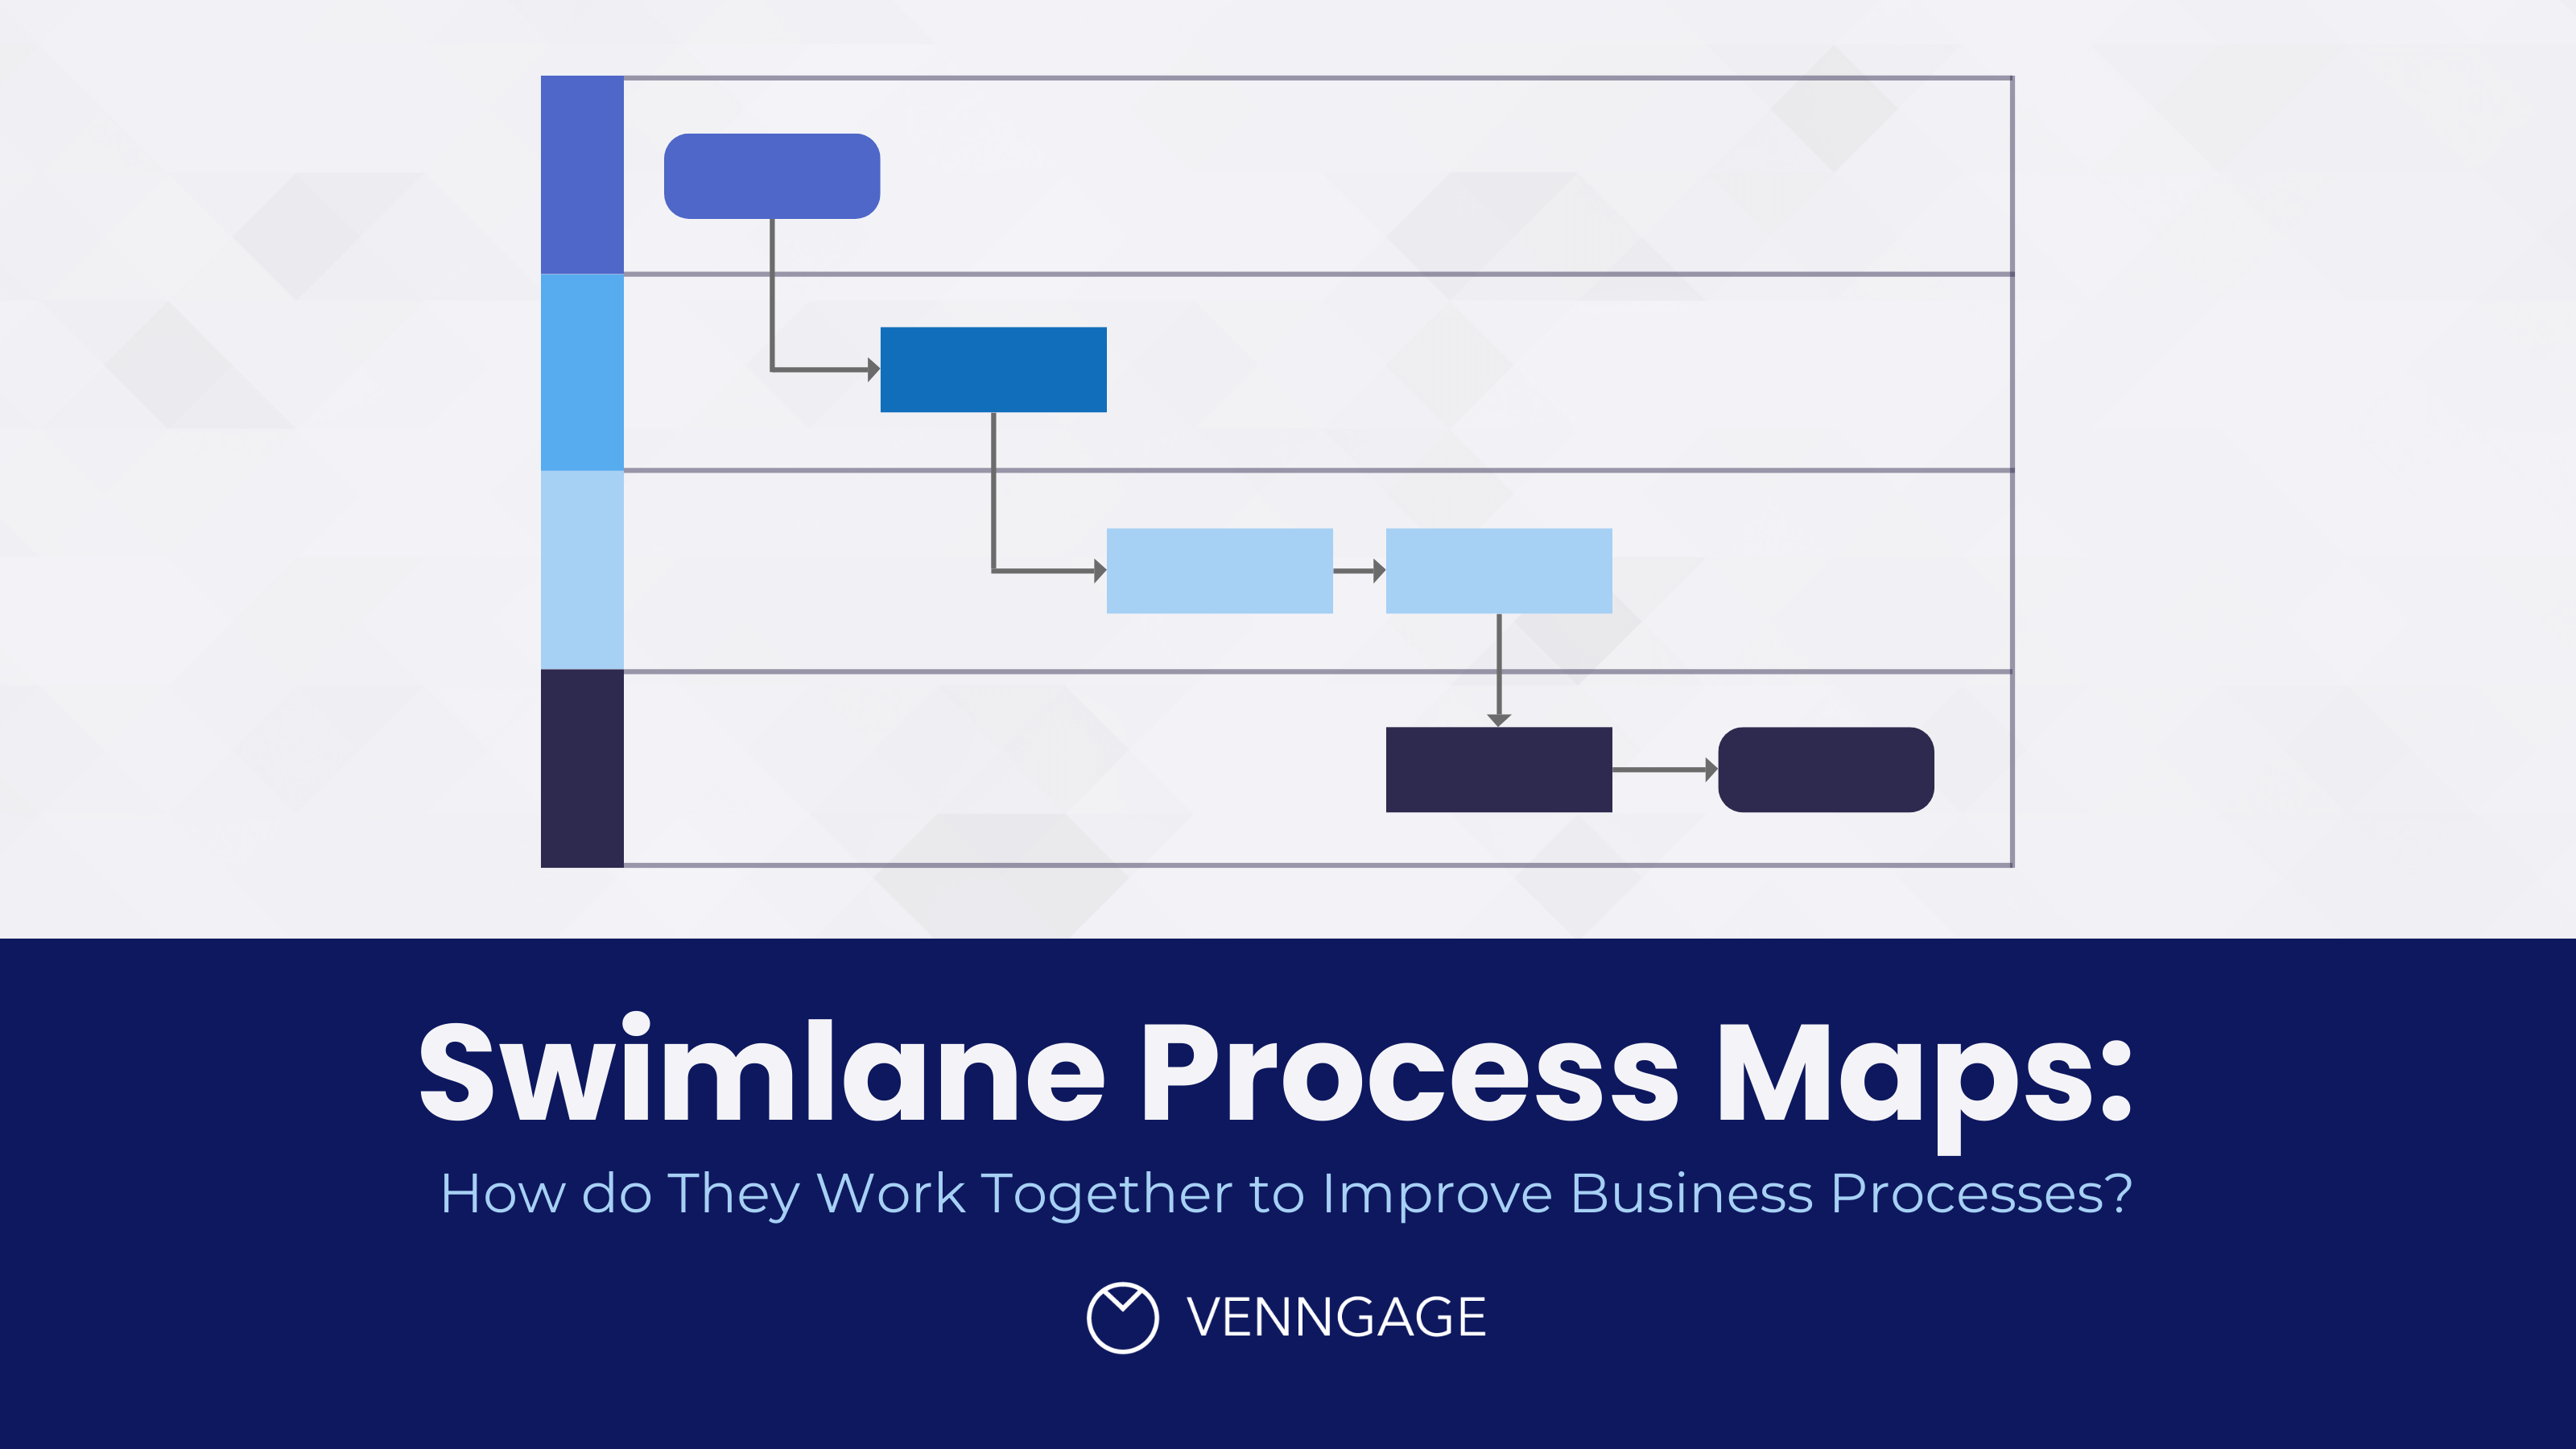 Swim lane of business process modeling